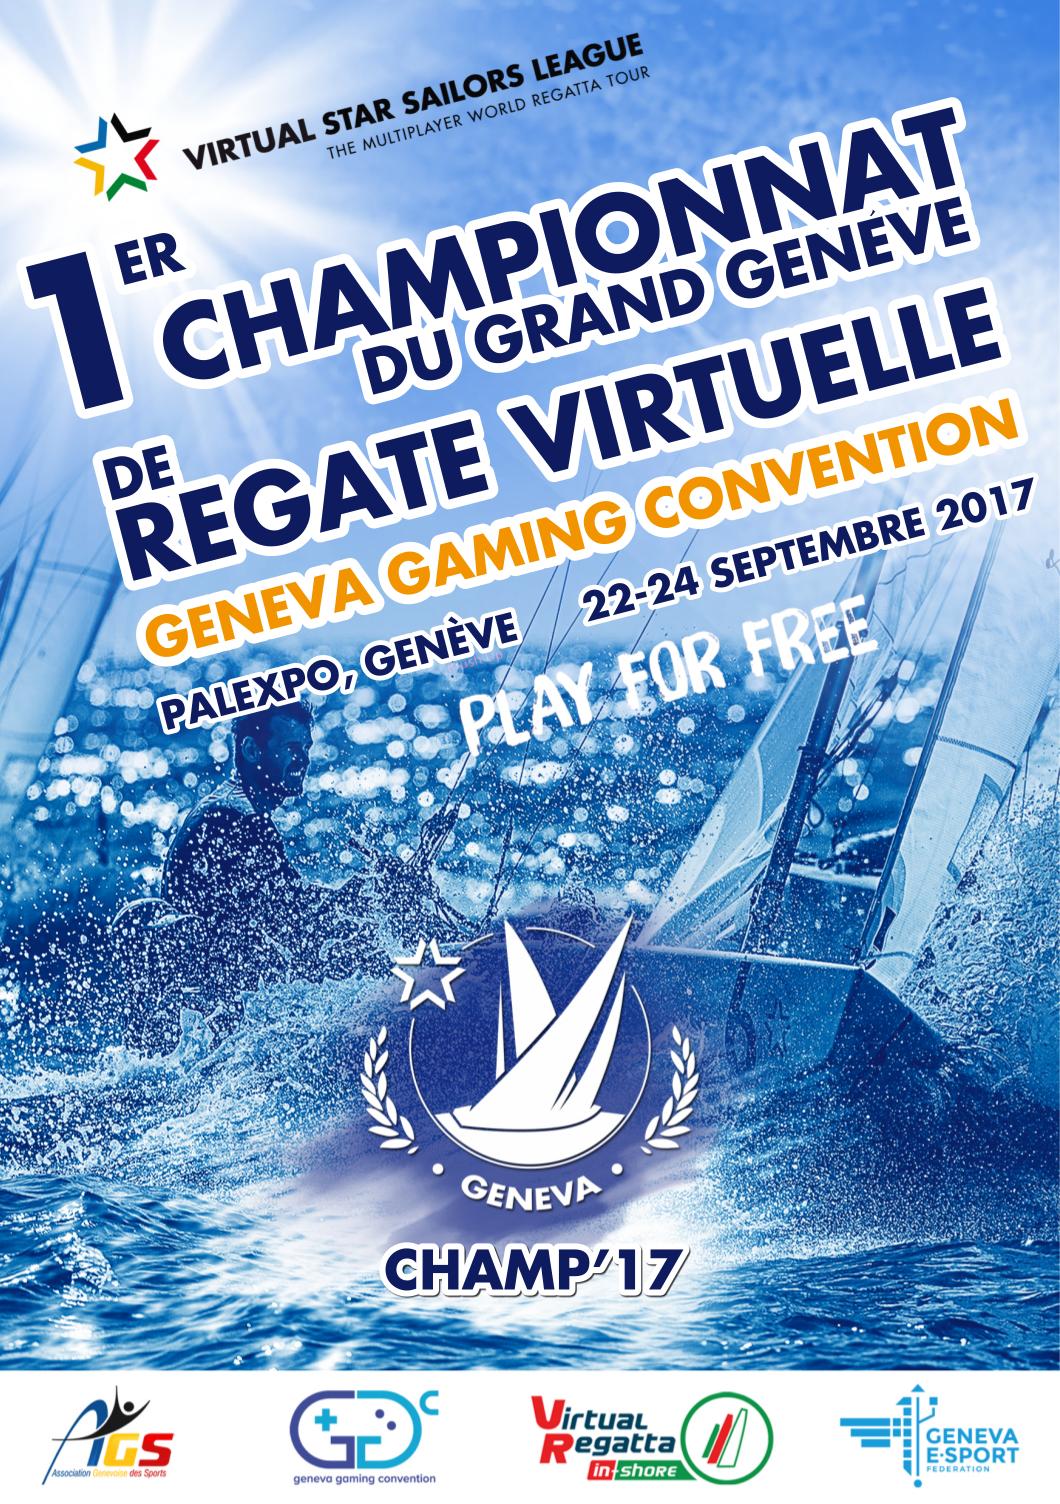  Virtual Sailing  Virtual SSL, Palexpo Hall 1  Genf  Heute Start